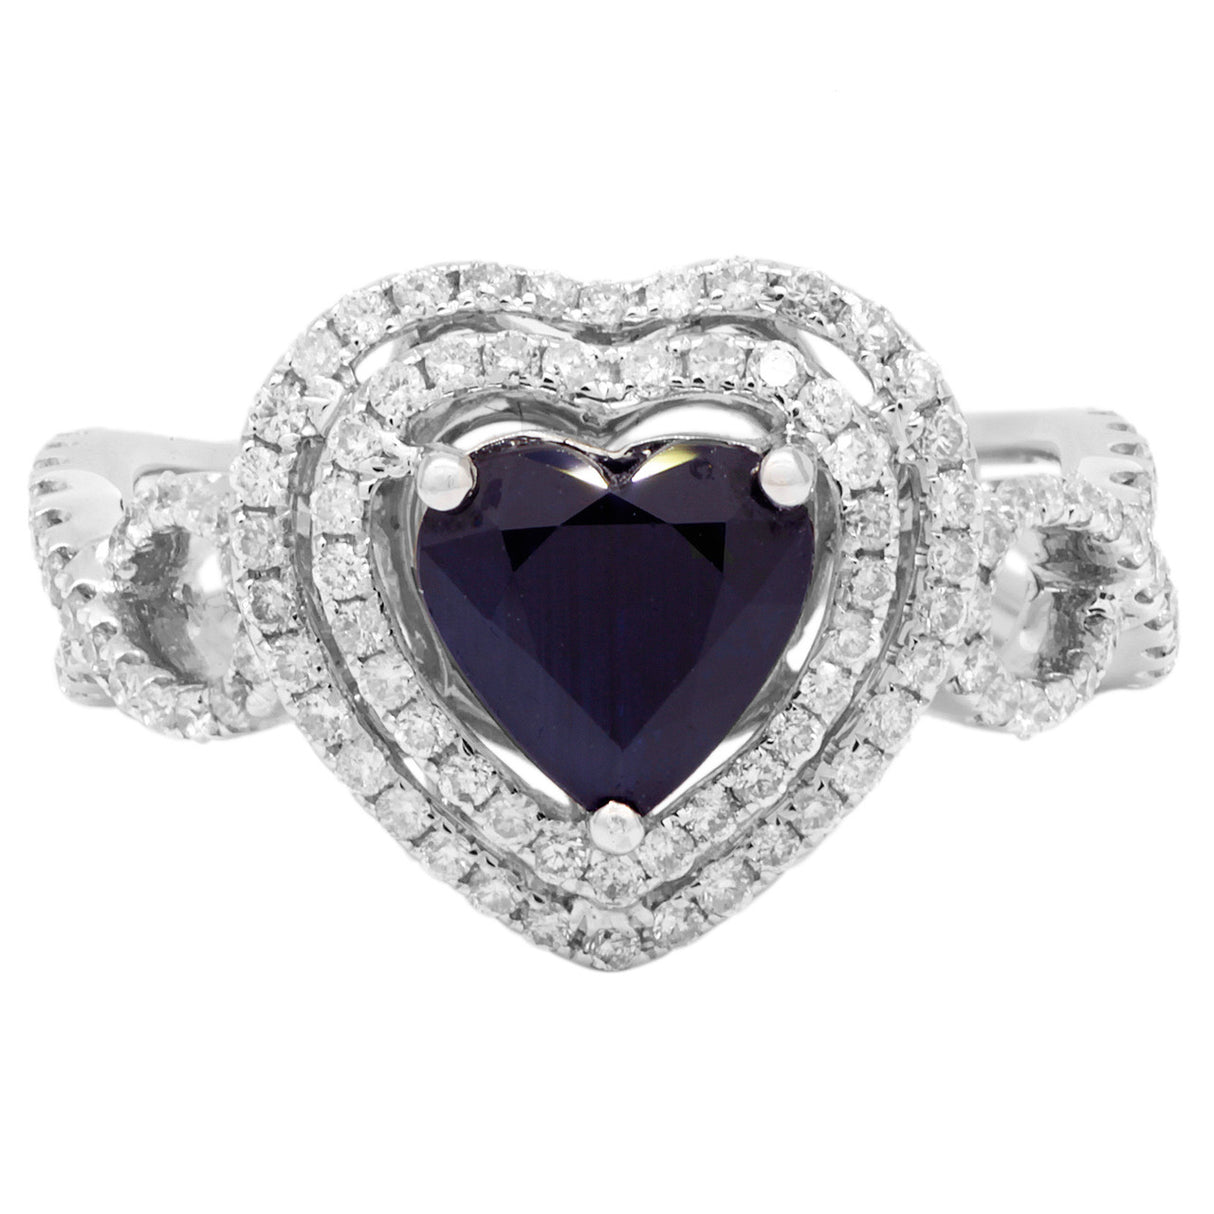 18K White Gold 1.05 Carat Heart Shaped Sapphire Diamond Ring